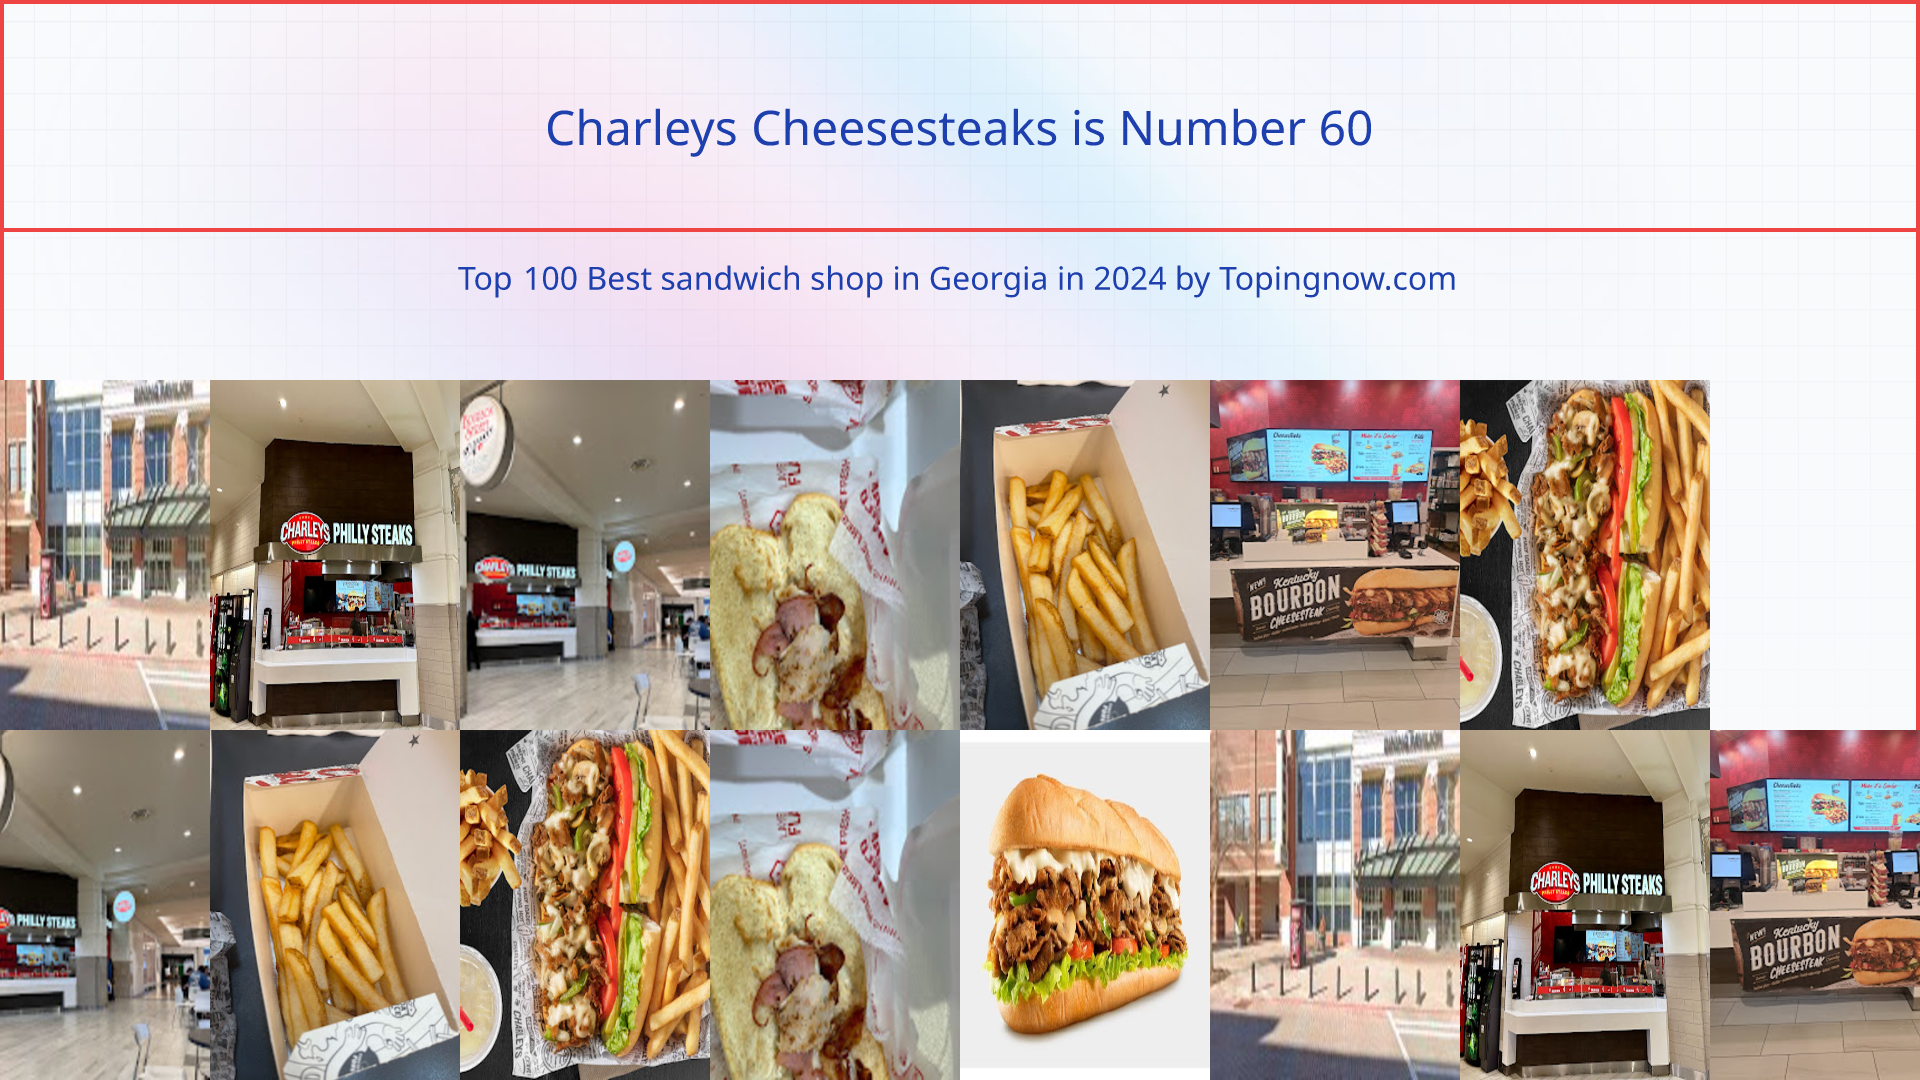 Charleys Cheesesteaks: Top 100 Best sandwich shop in Georgia in 2024